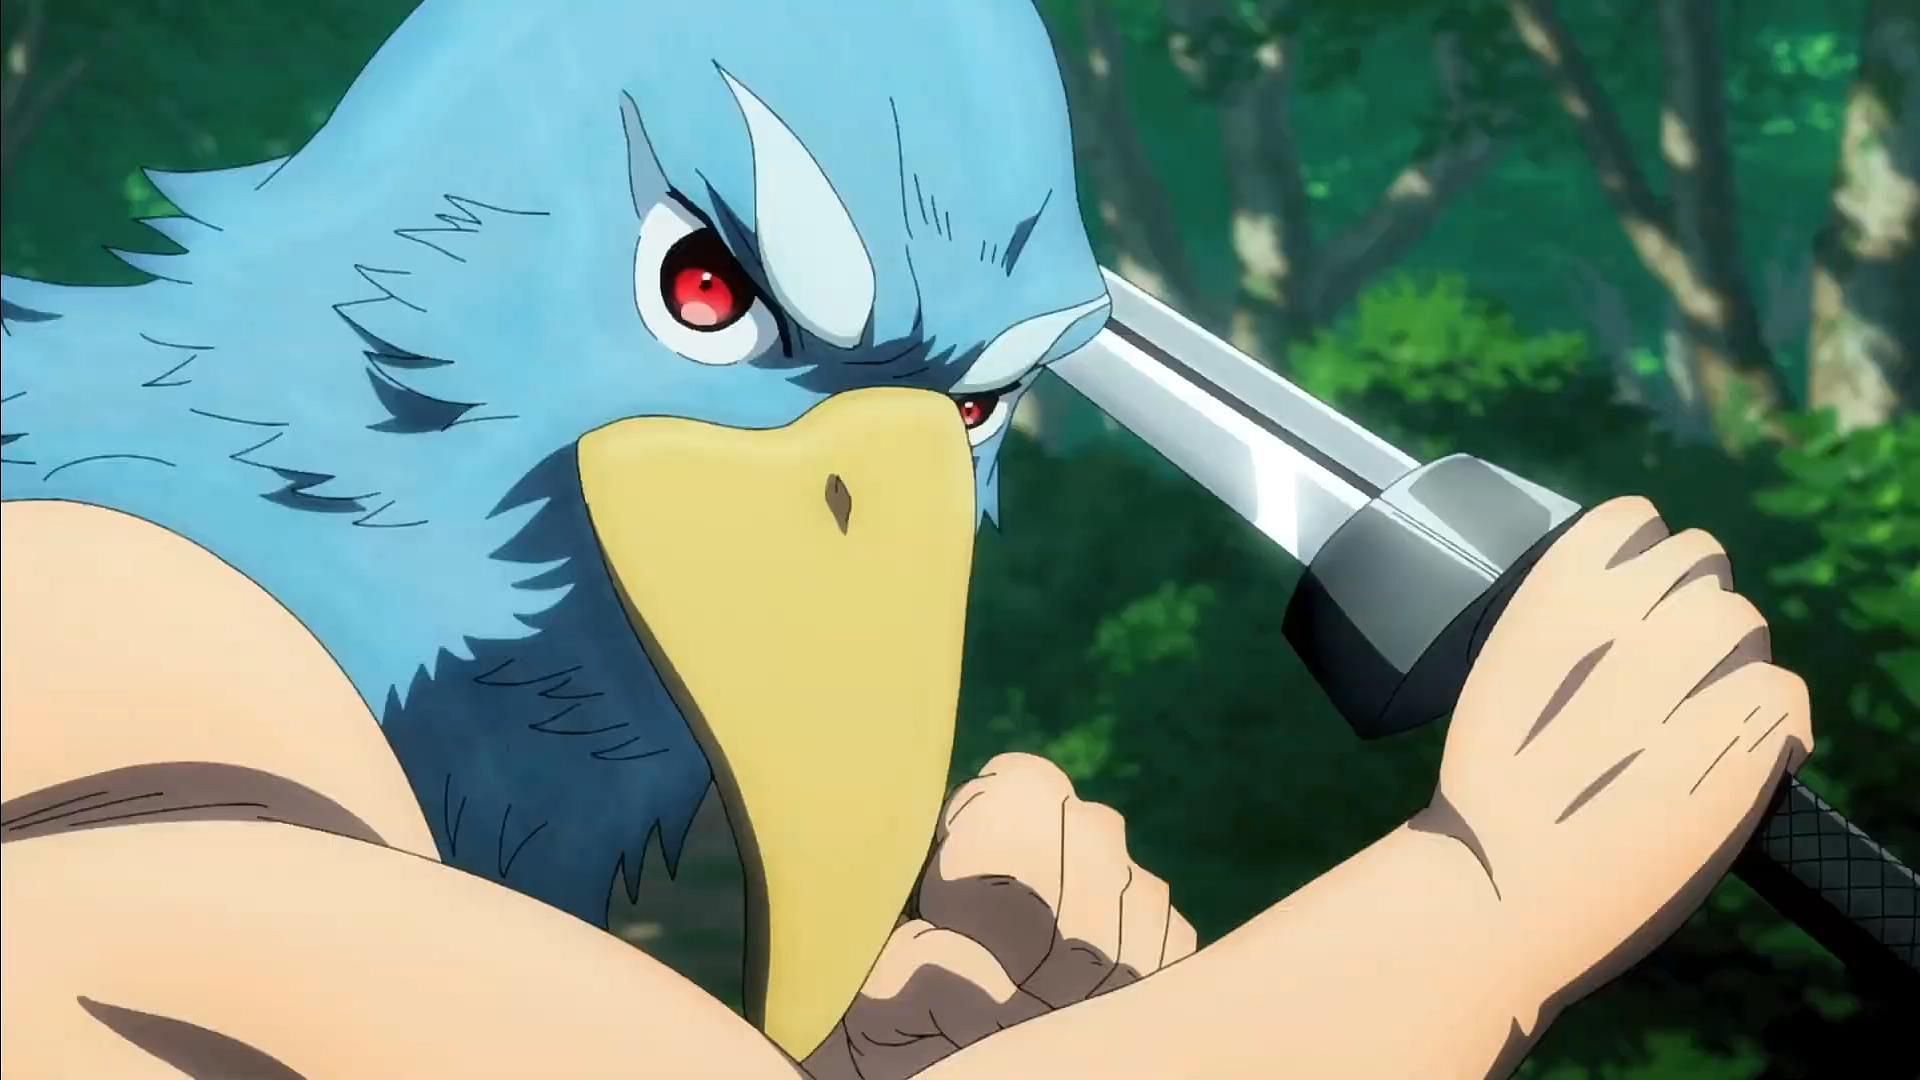 Rakuro Hizutome as shown in anime (Image via Studio C2C)